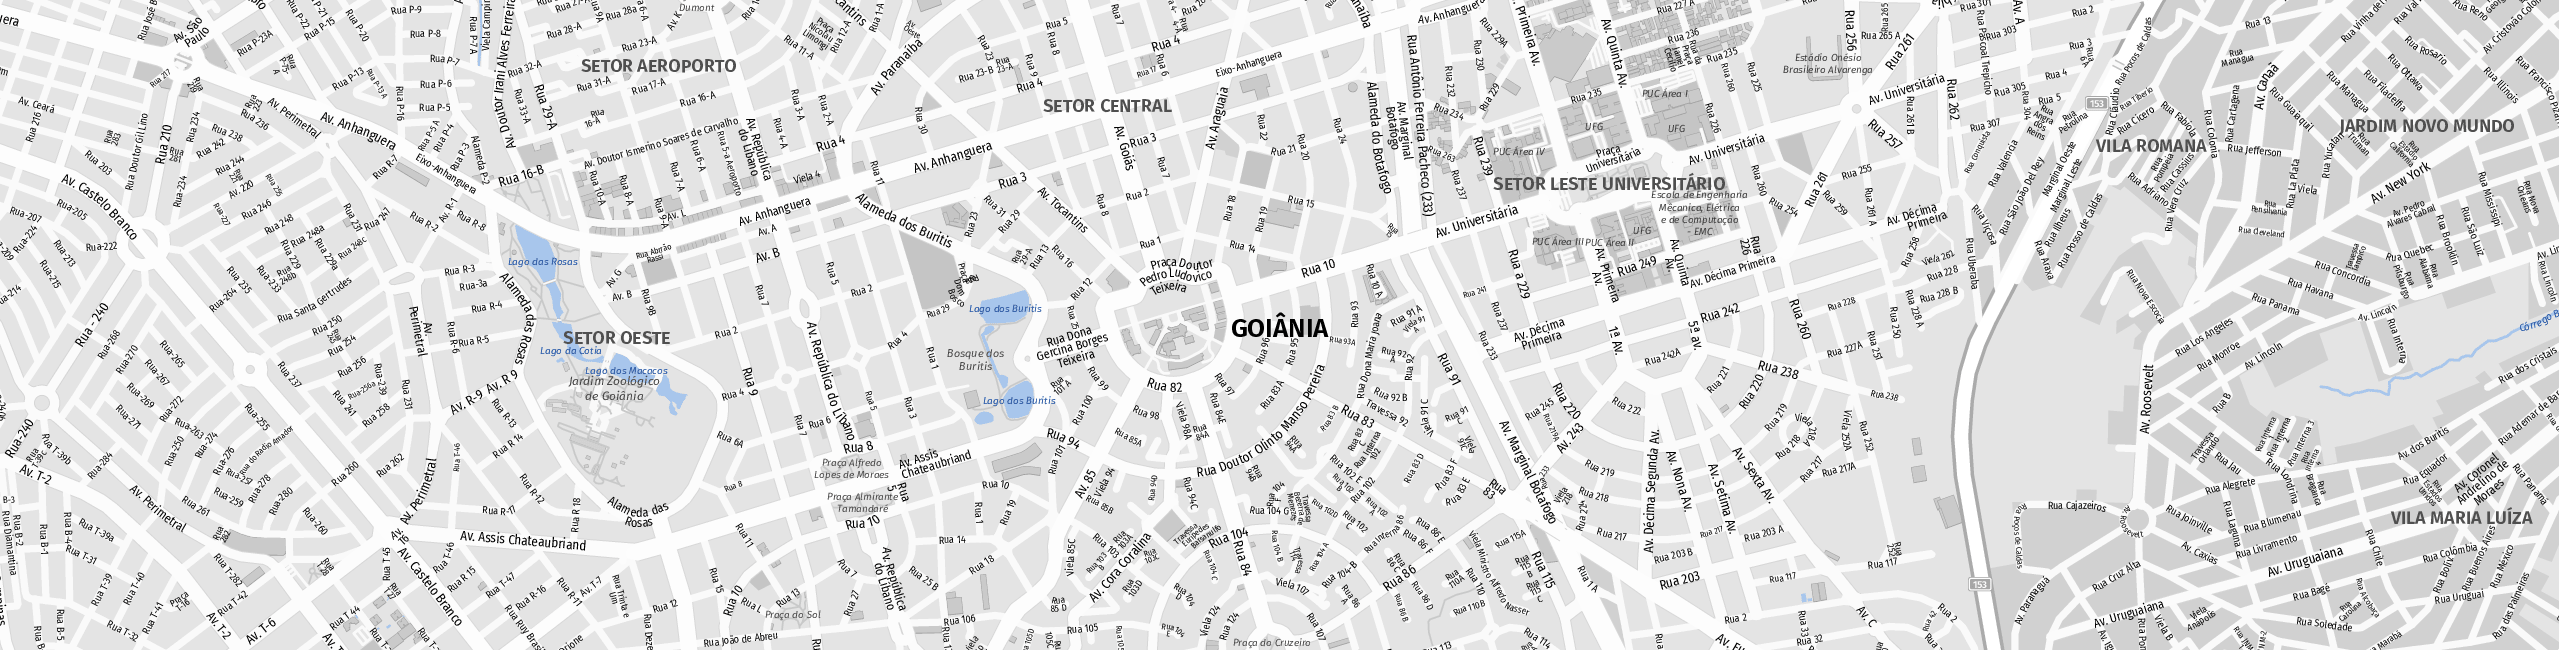 Stadtplan Goiânia zum Downloaden.